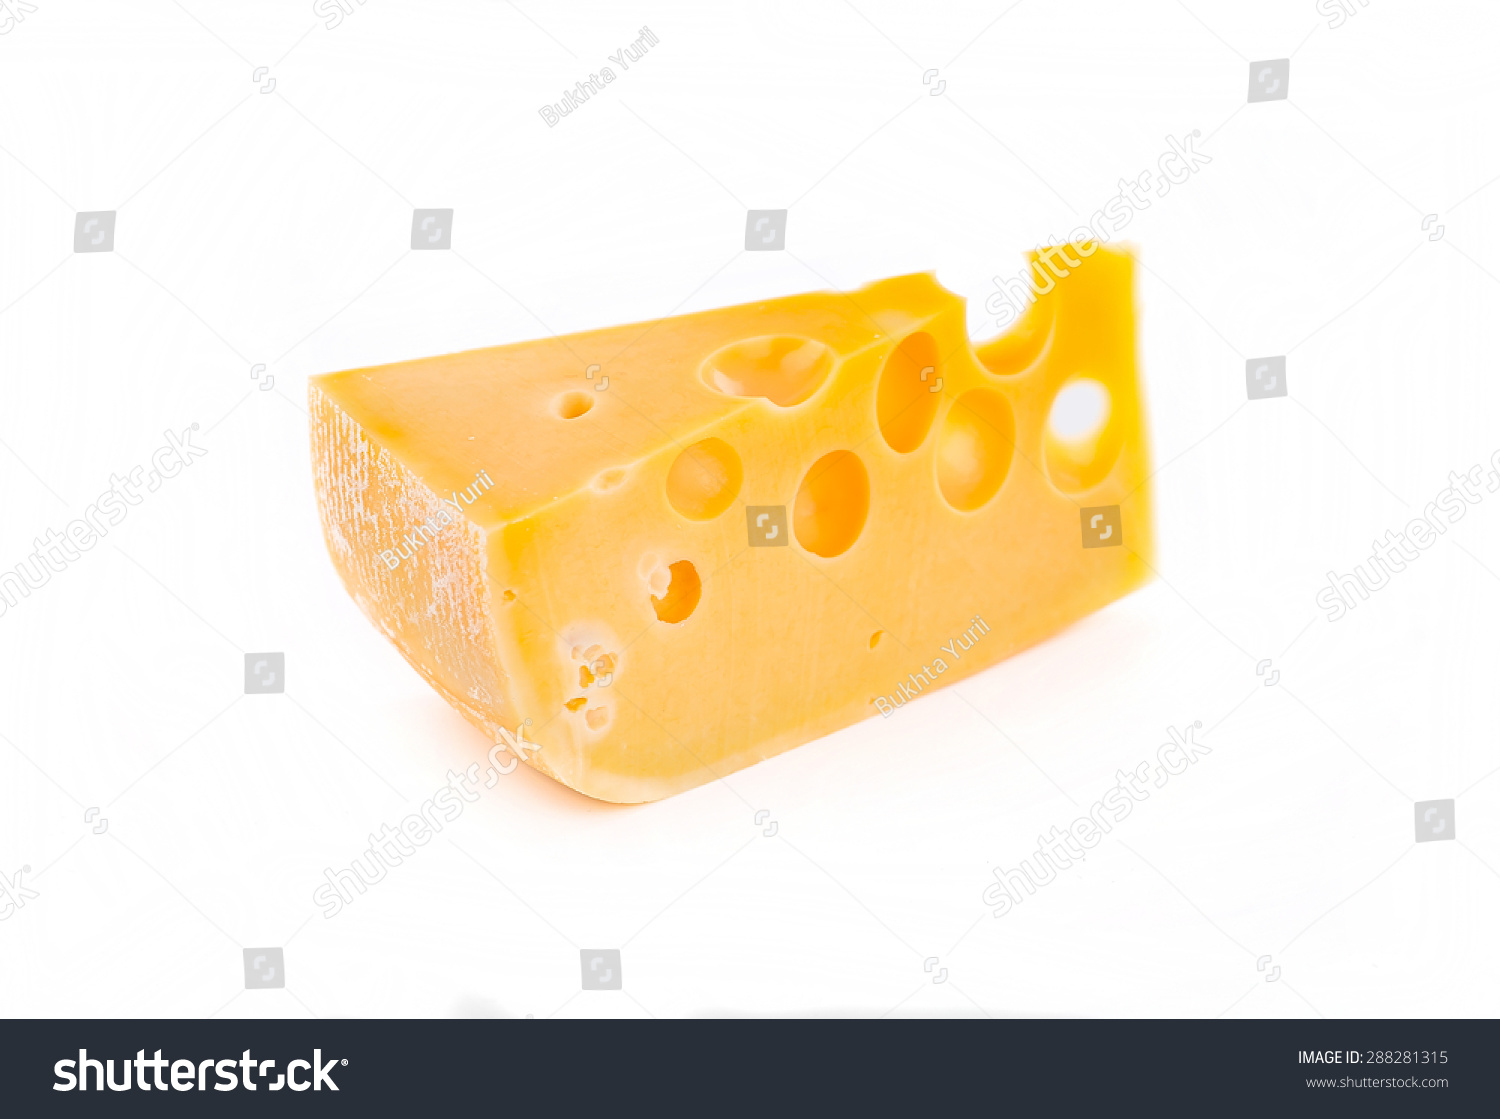 cheese #288281315